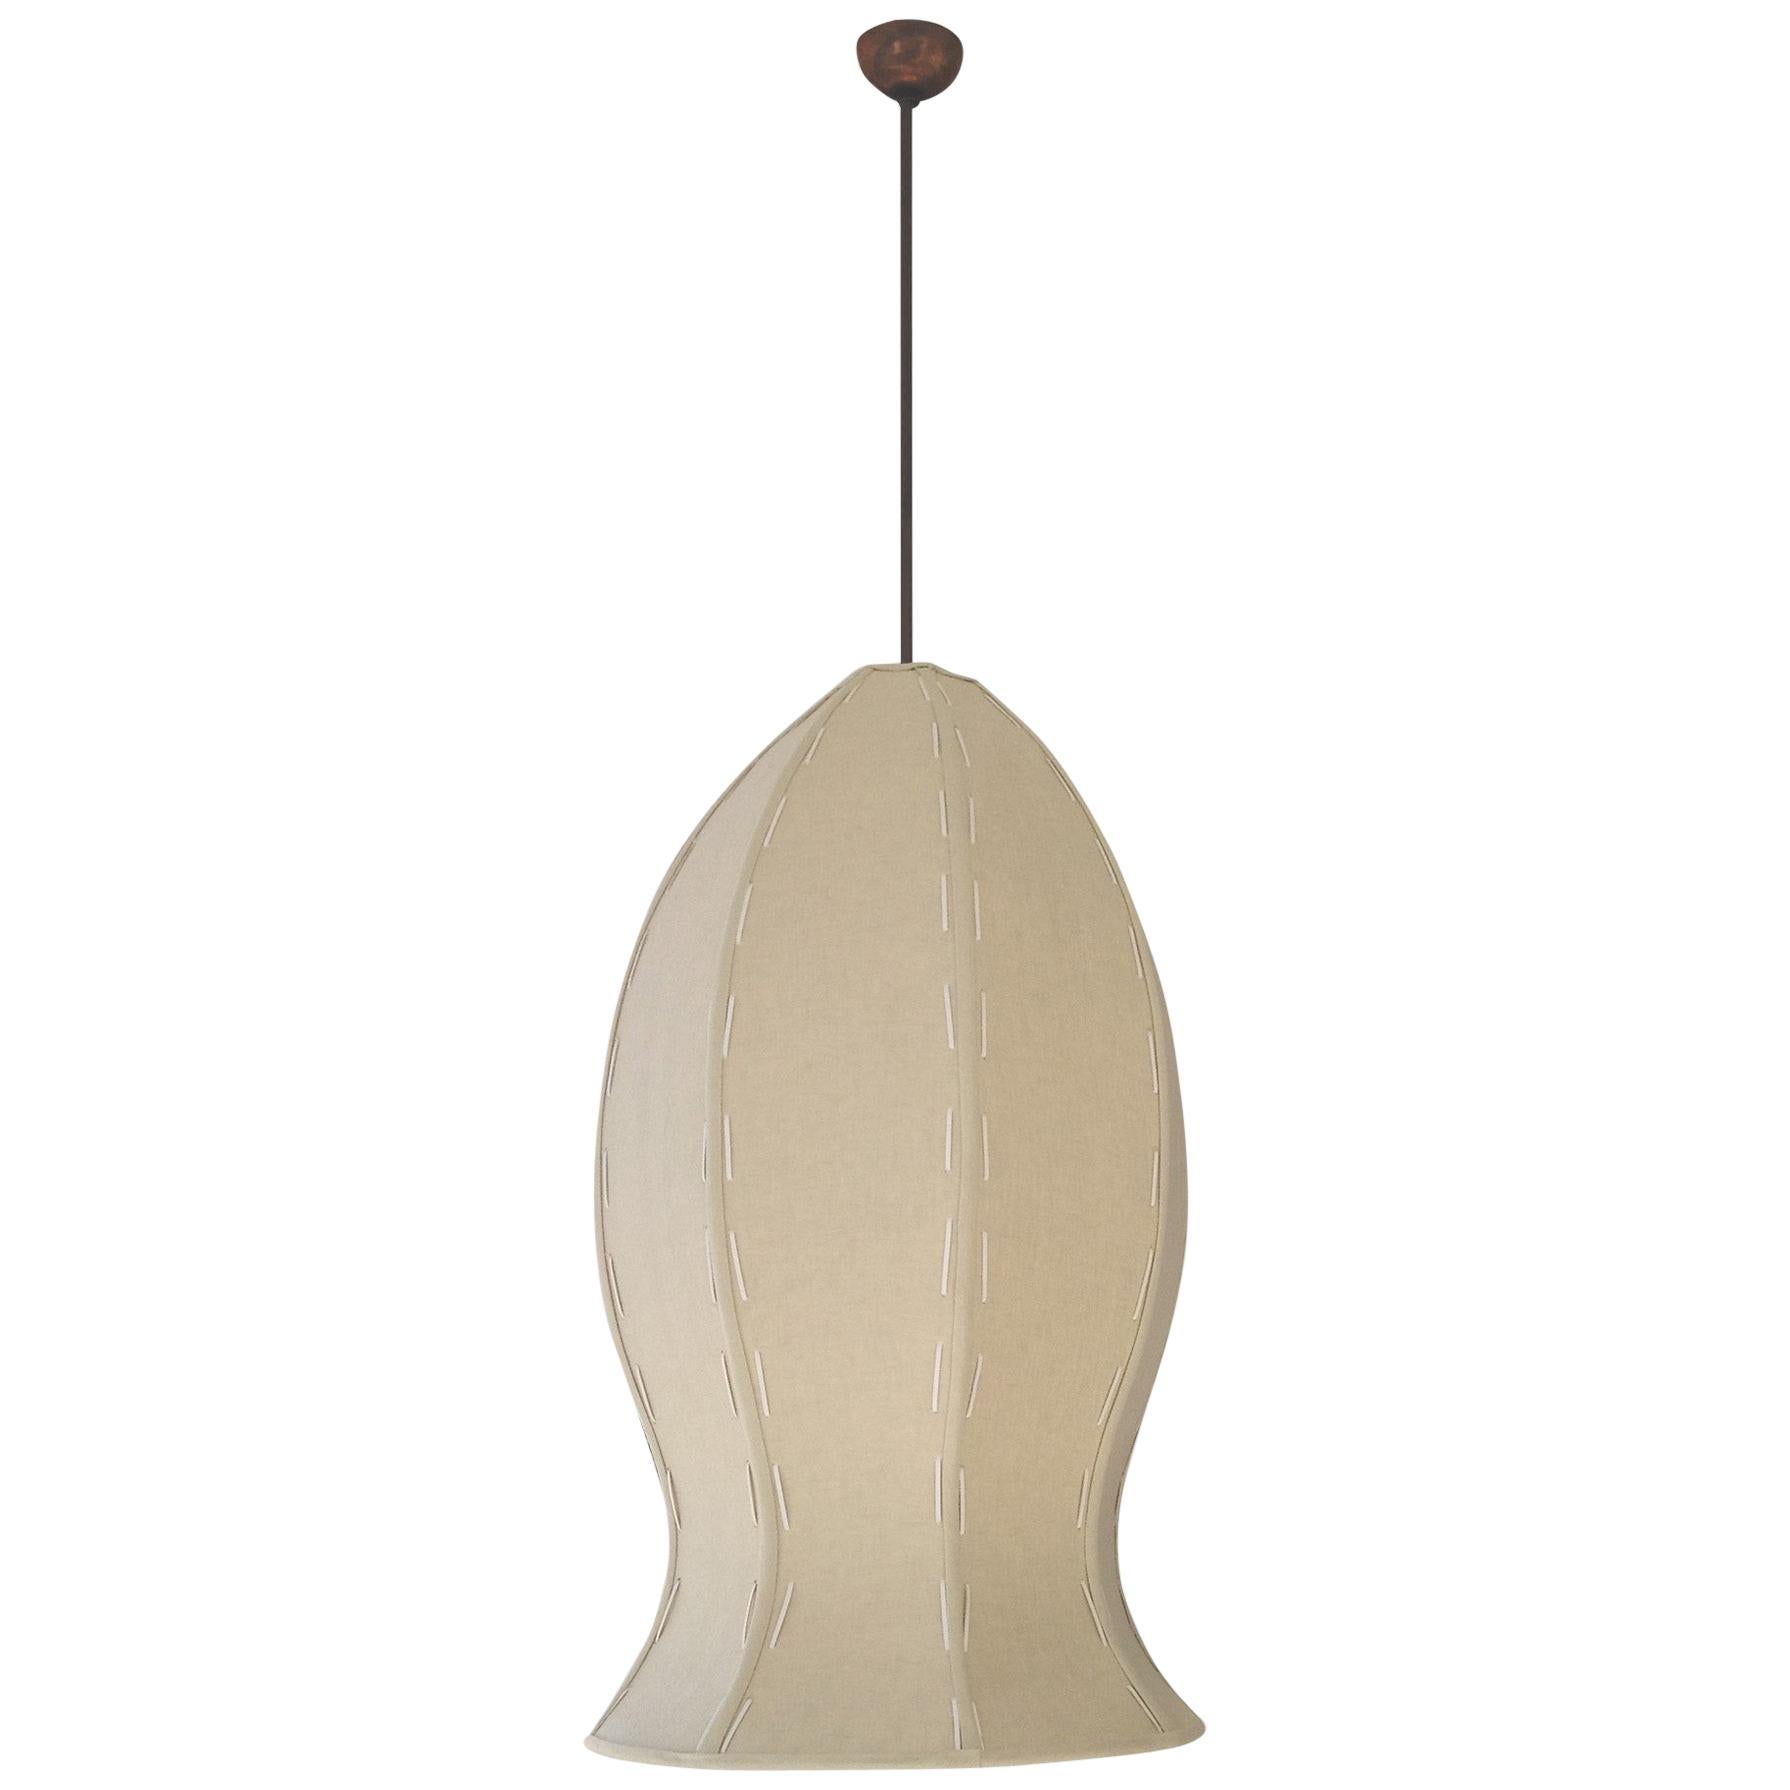 Tall Tulip Pendant Lamp by Wende Reid - Organic Modern, Sculptural, Handmade